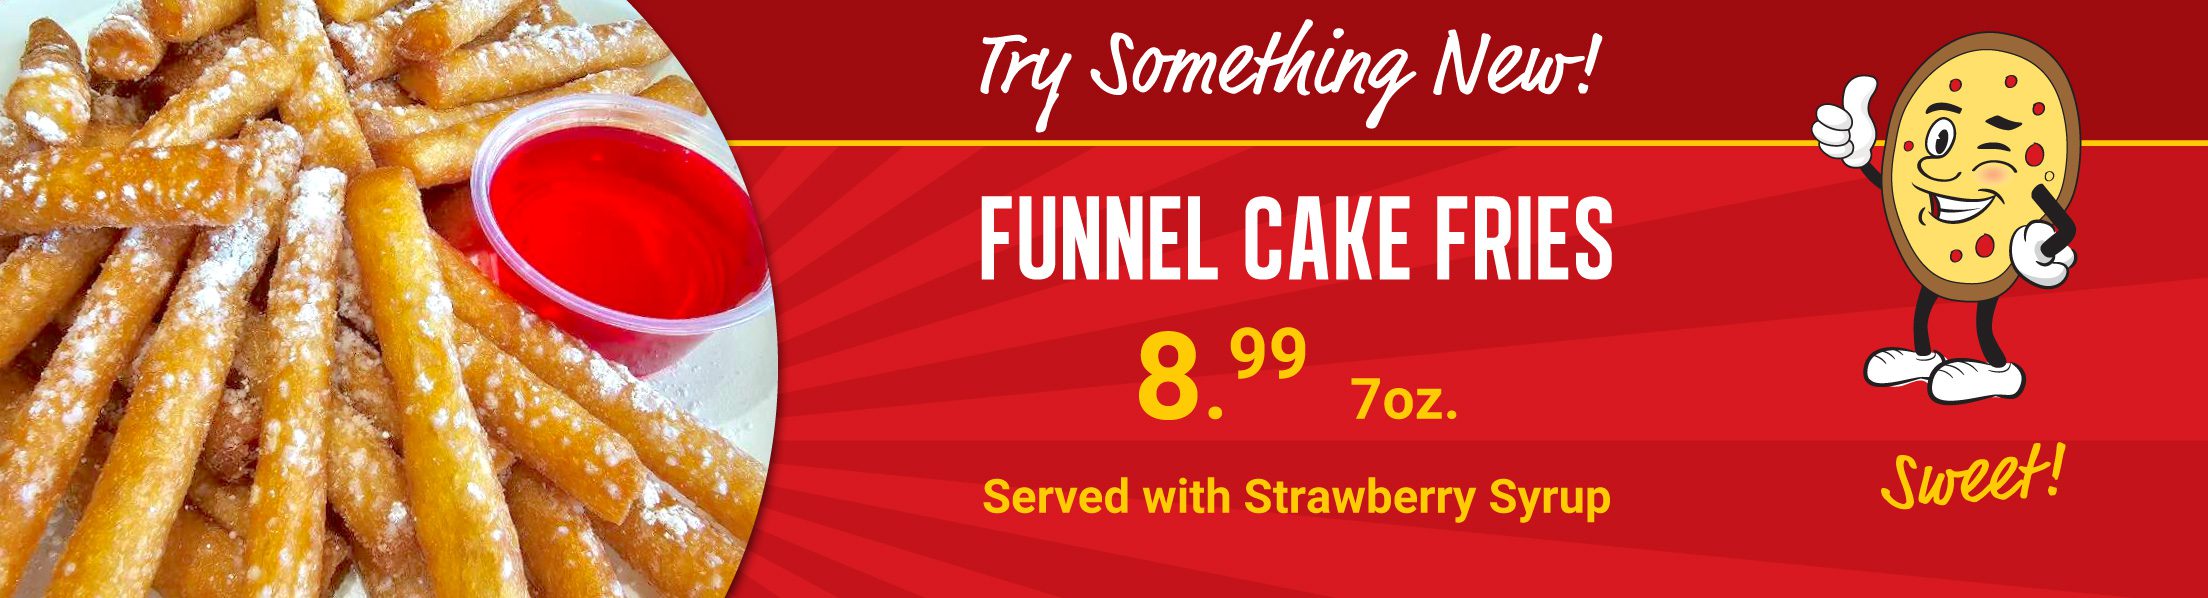 Try something new! Funnel cake fries 8.99